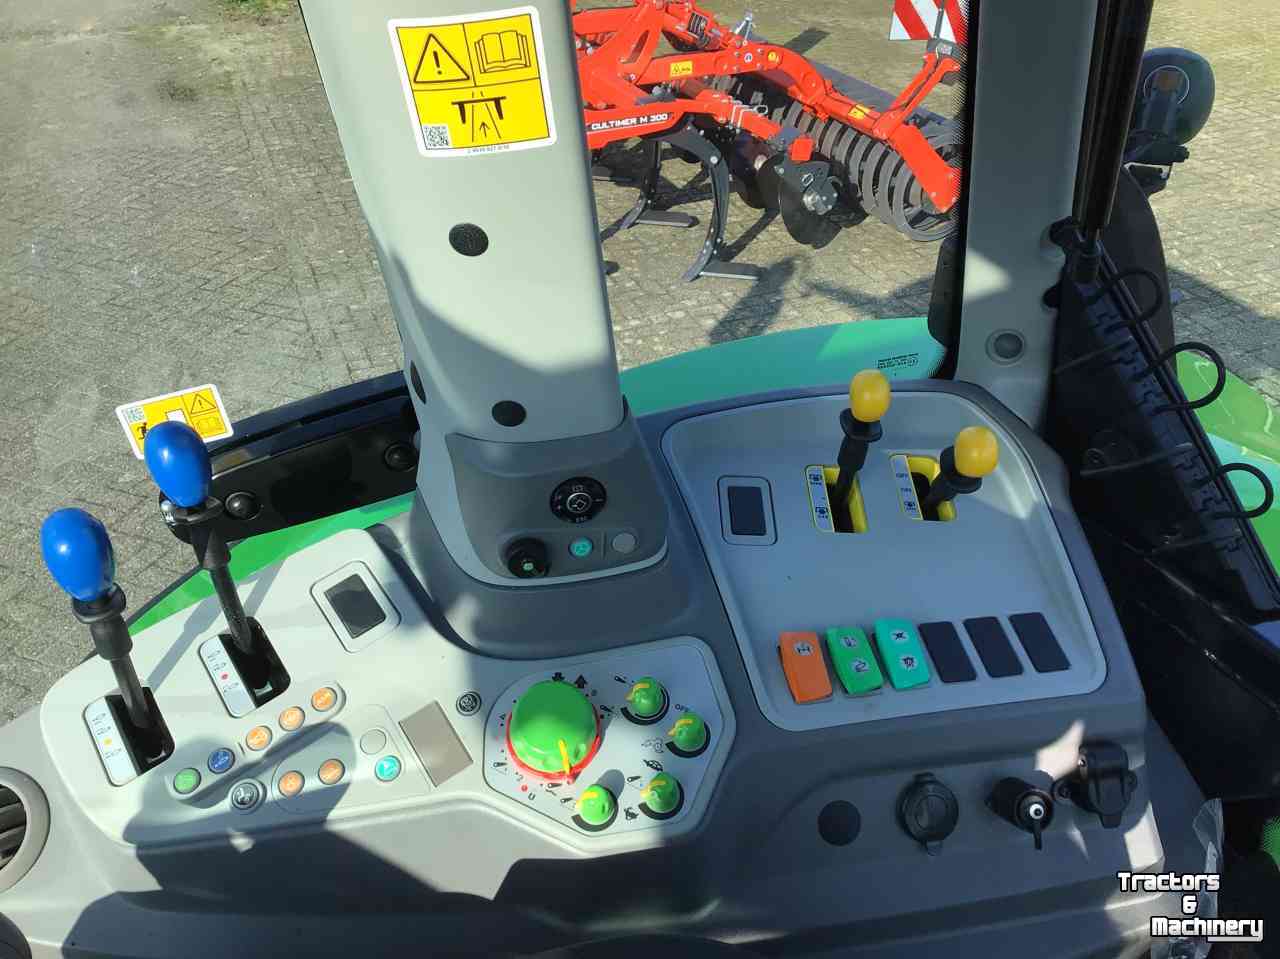 Traktoren Deutz-Fahr Agrotron 6140.4 RV Shift